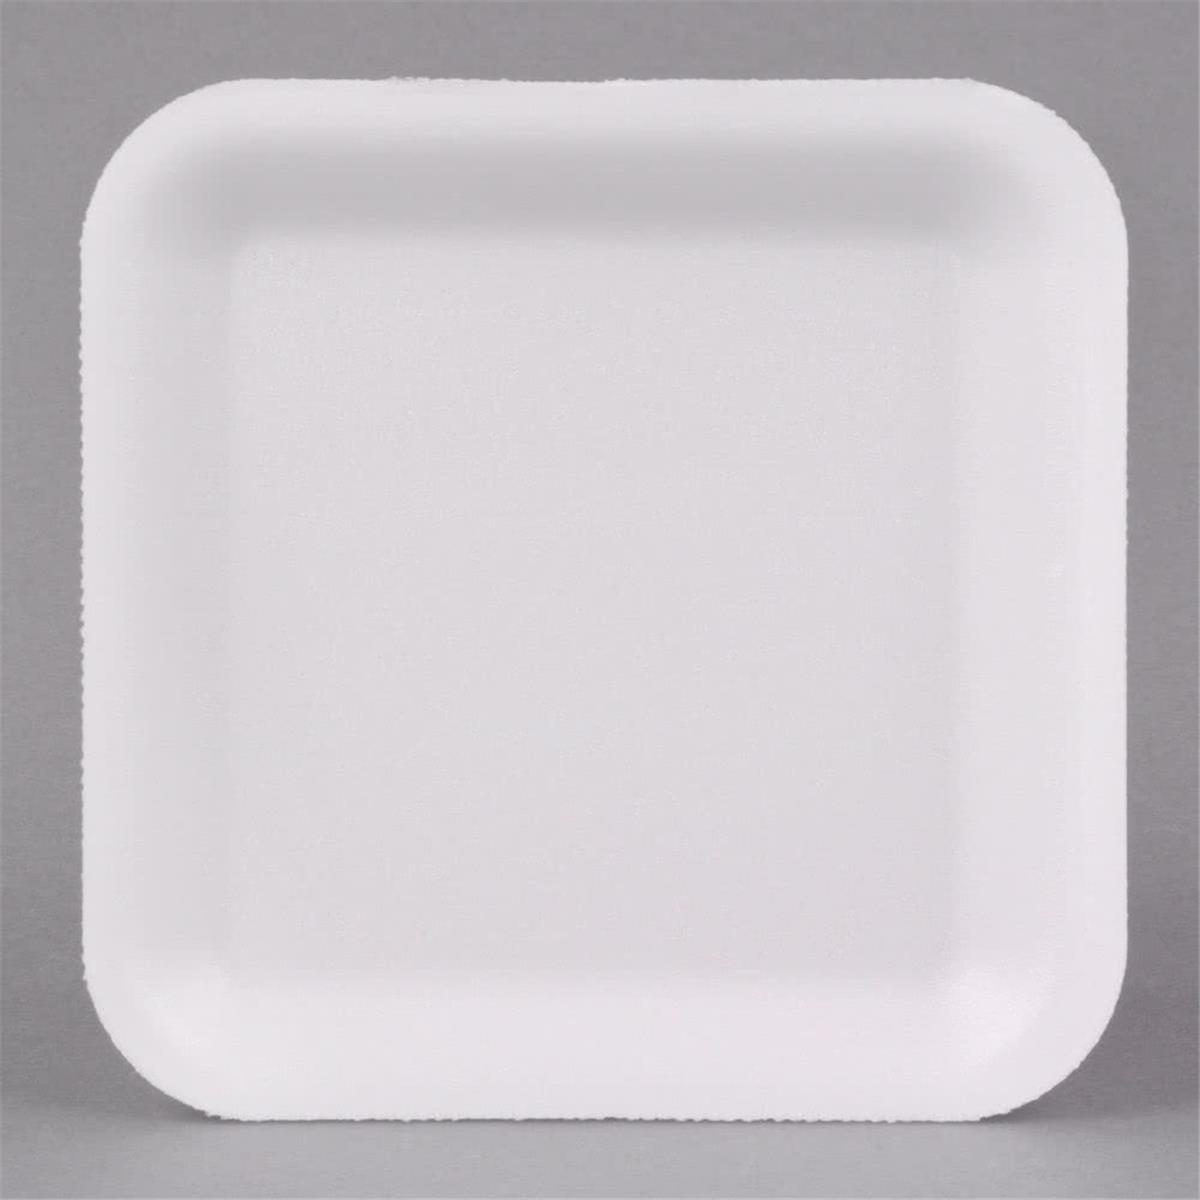 201010sw00 Cpc Foam Tray, White - Case Of 500